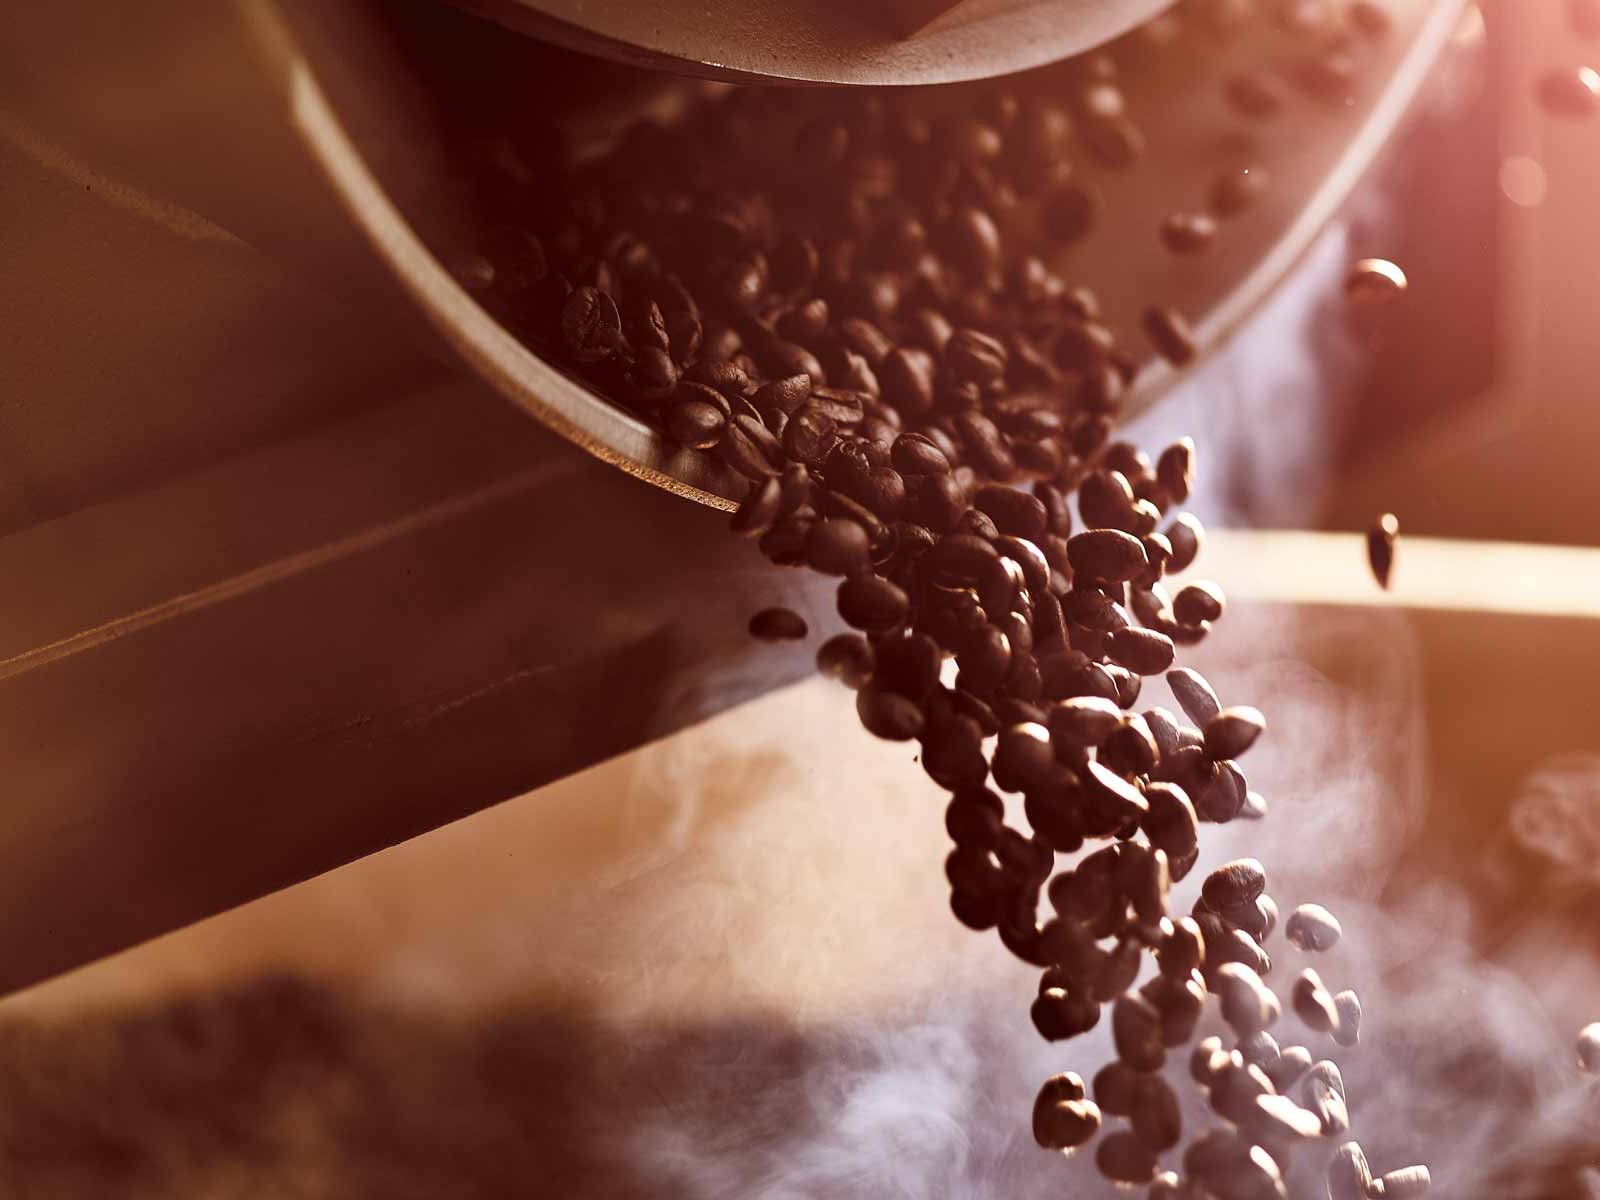 Coffee provides a livelihood for 100 million people worldwide.